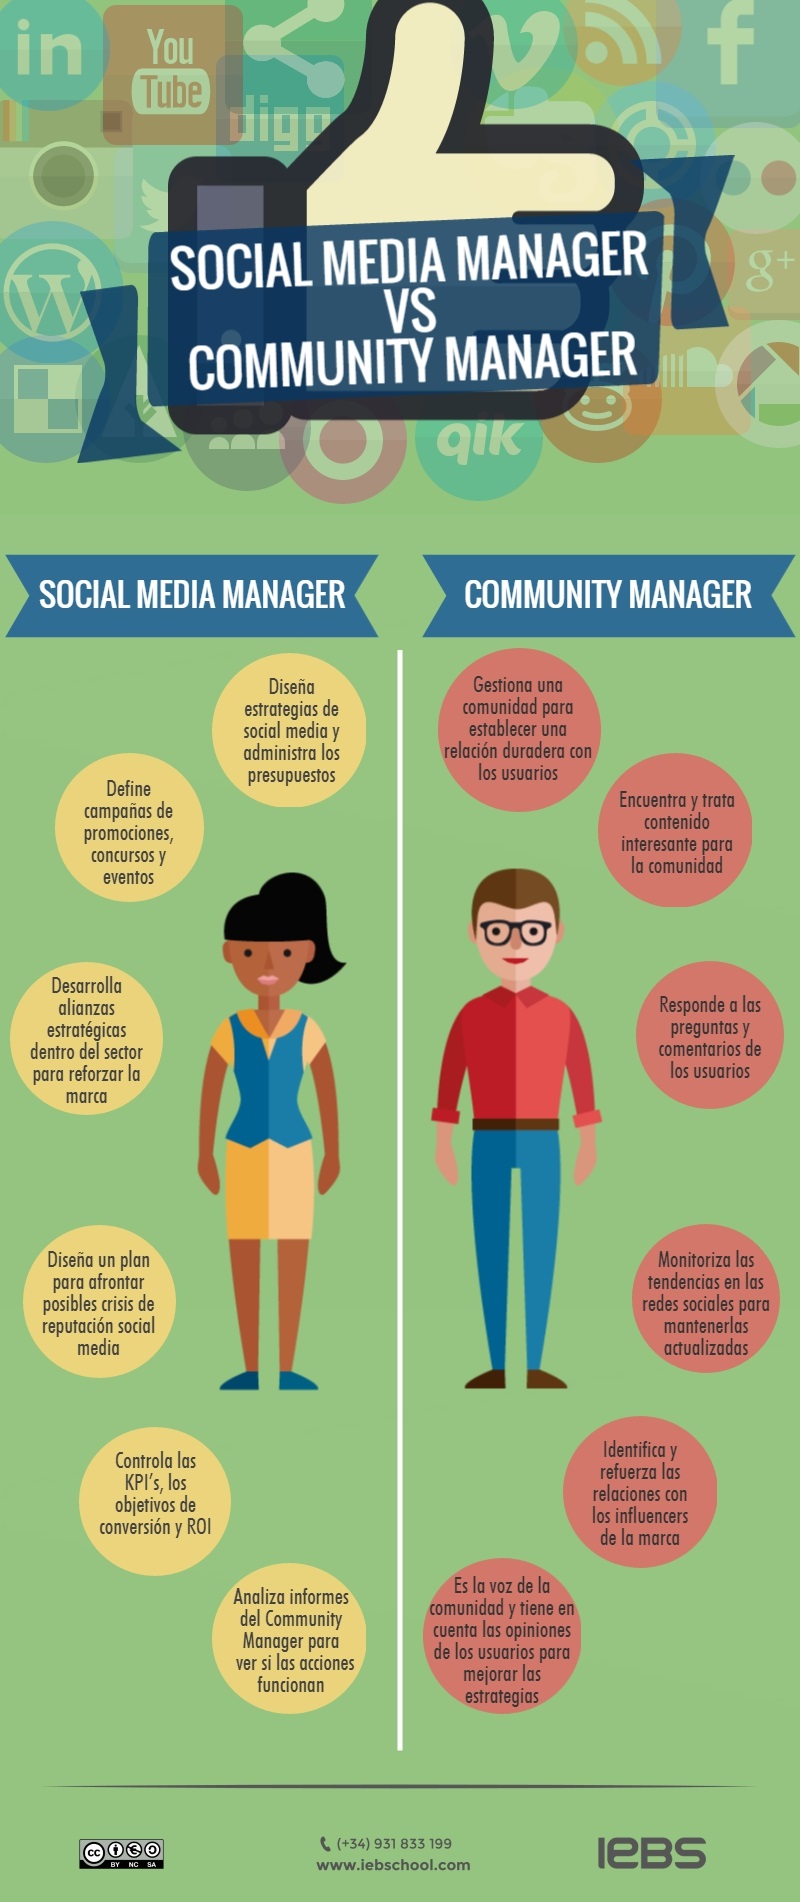 Social Media Manager vs Community Manager - Social Media Manager VS Community Manager1